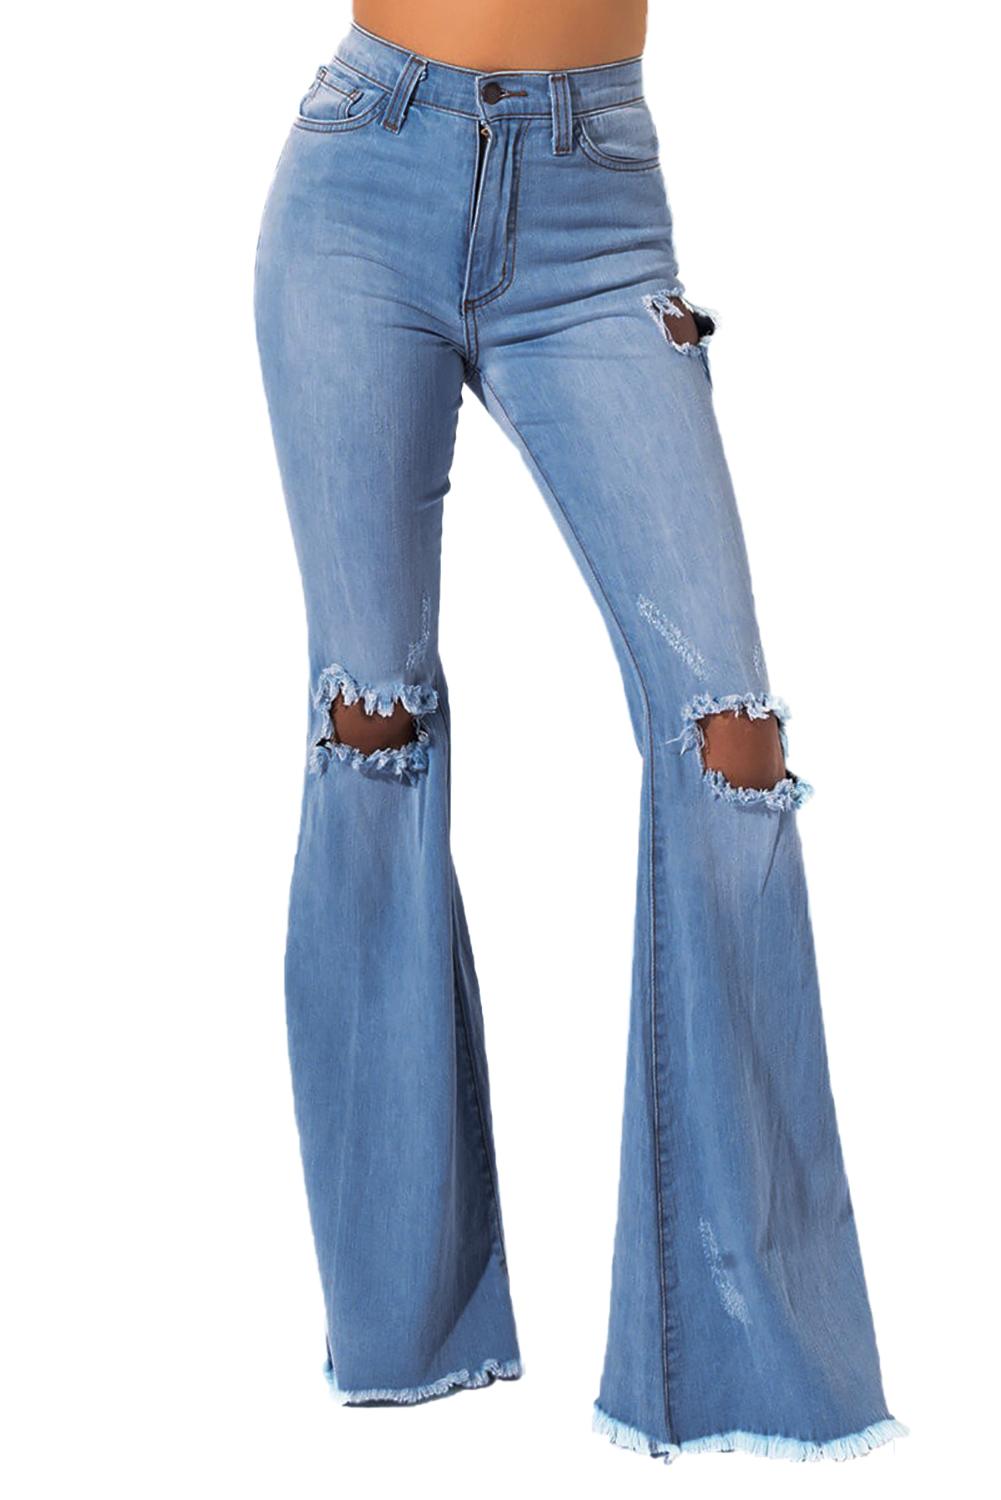 Stylish Sky Blue High Waisted Distressed Flare Jeans